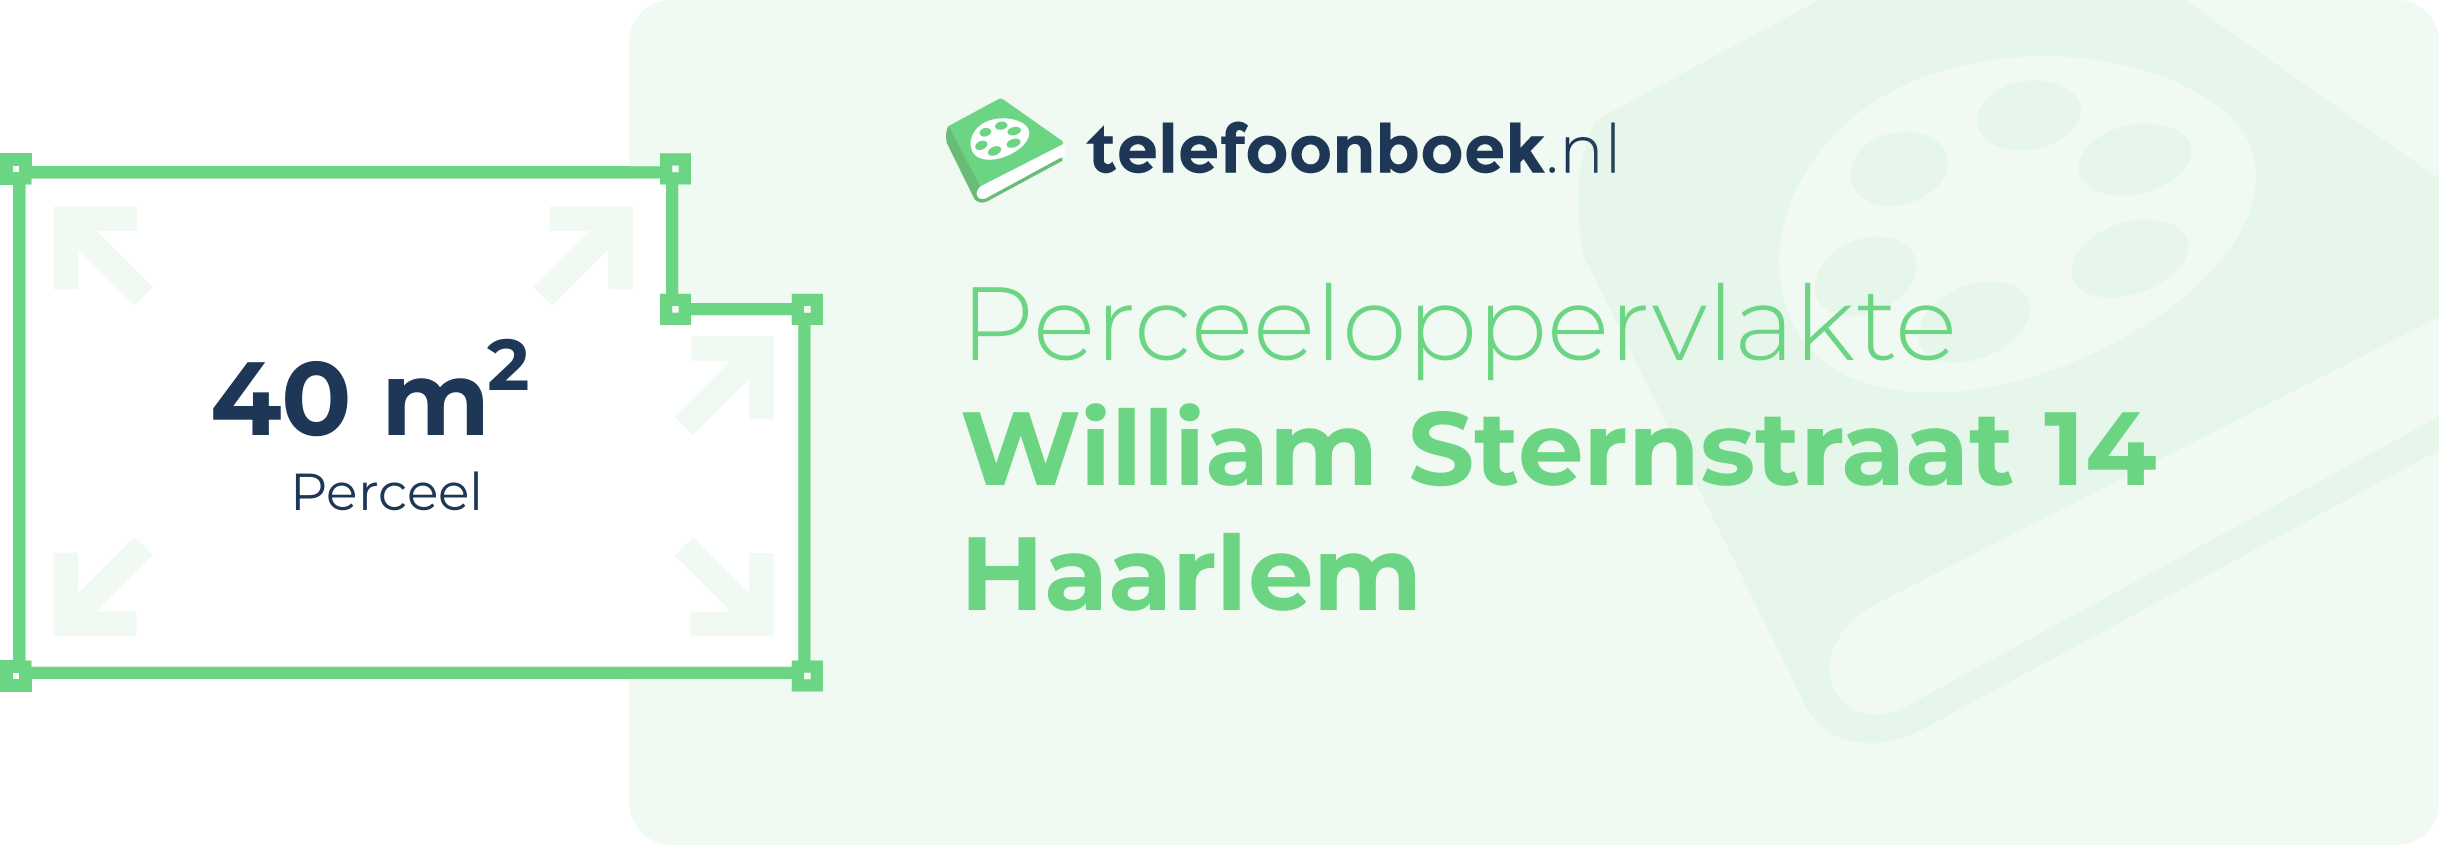 Perceeloppervlakte William Sternstraat 14 Haarlem